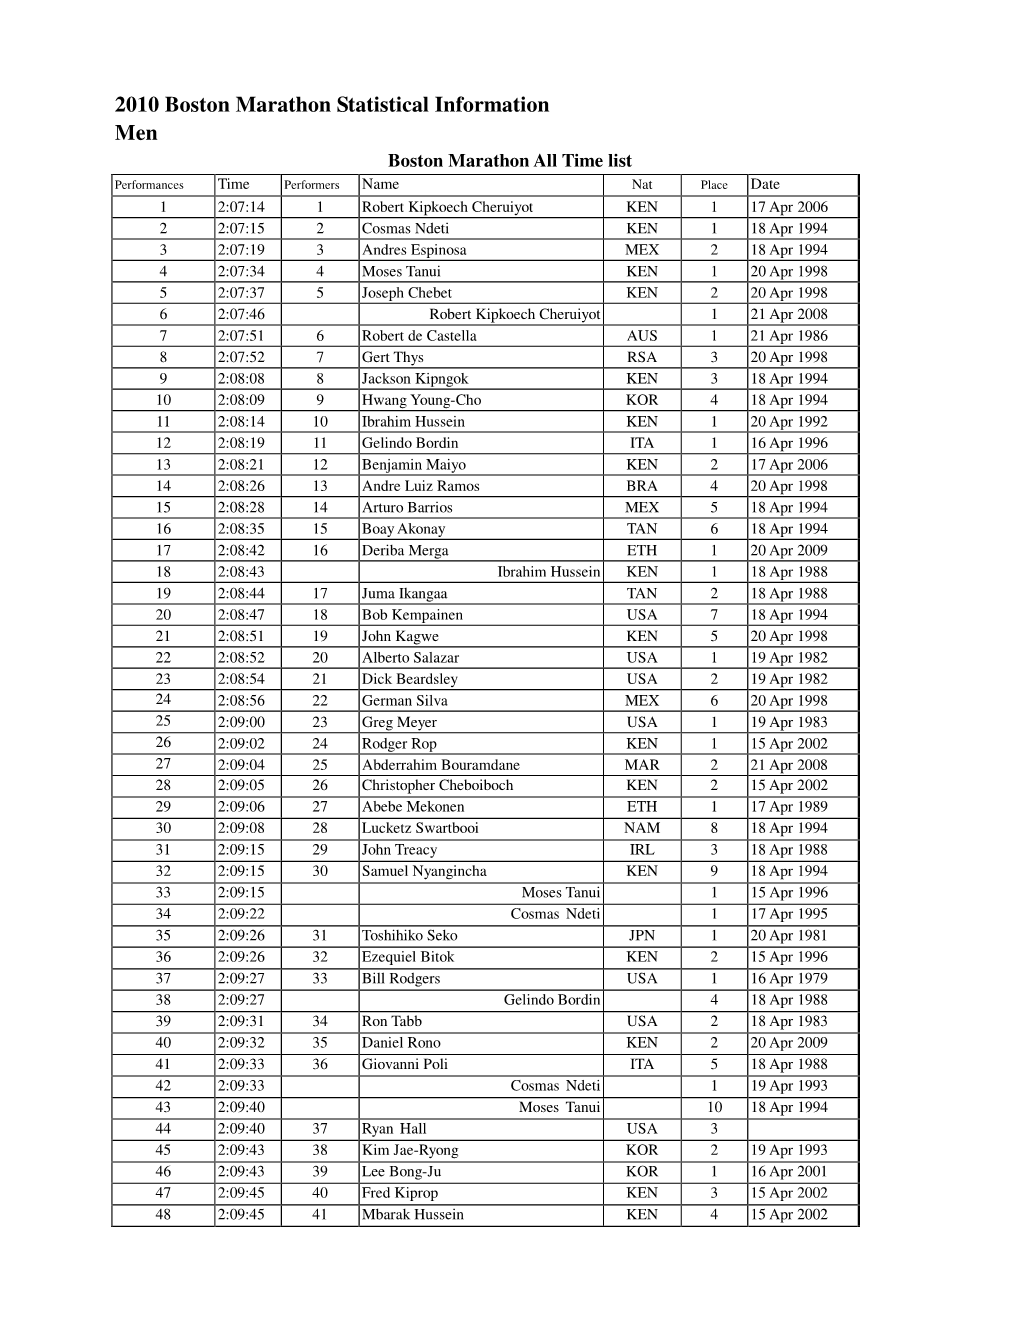 2010 Boston Marathon Statistical Information Men Boston Marathon All Time List